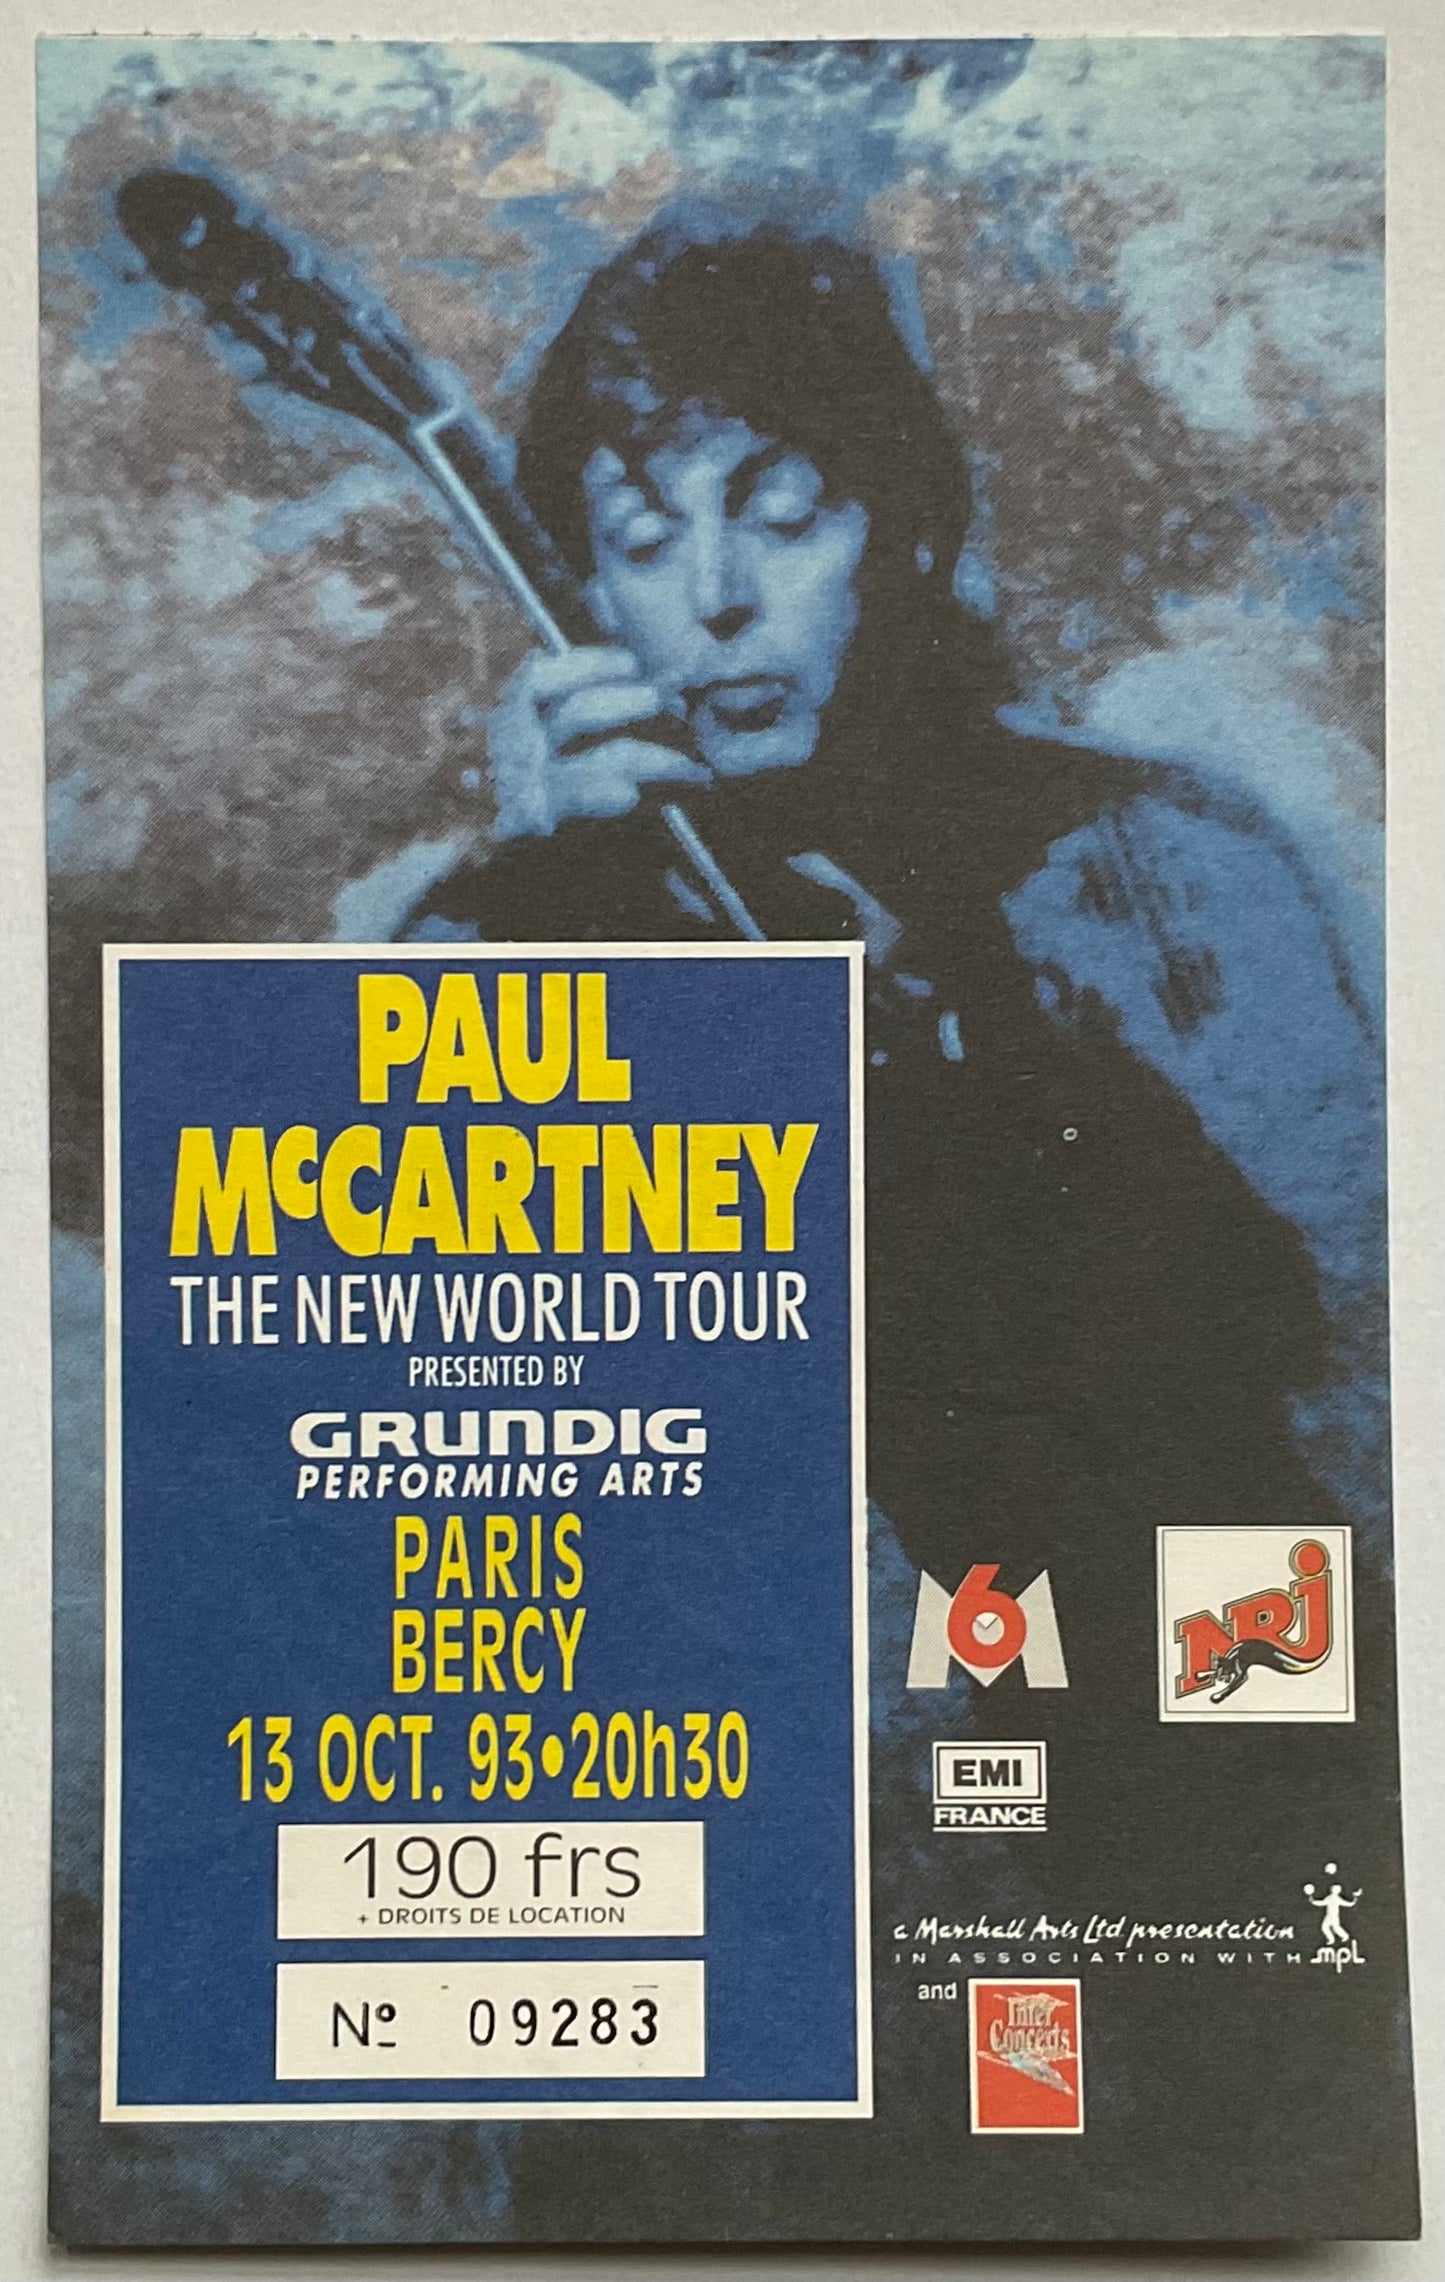 Beatles Paul McCartney Used Concert Ticket Palais Omnisports de Bercy Paris 13th Oct 93